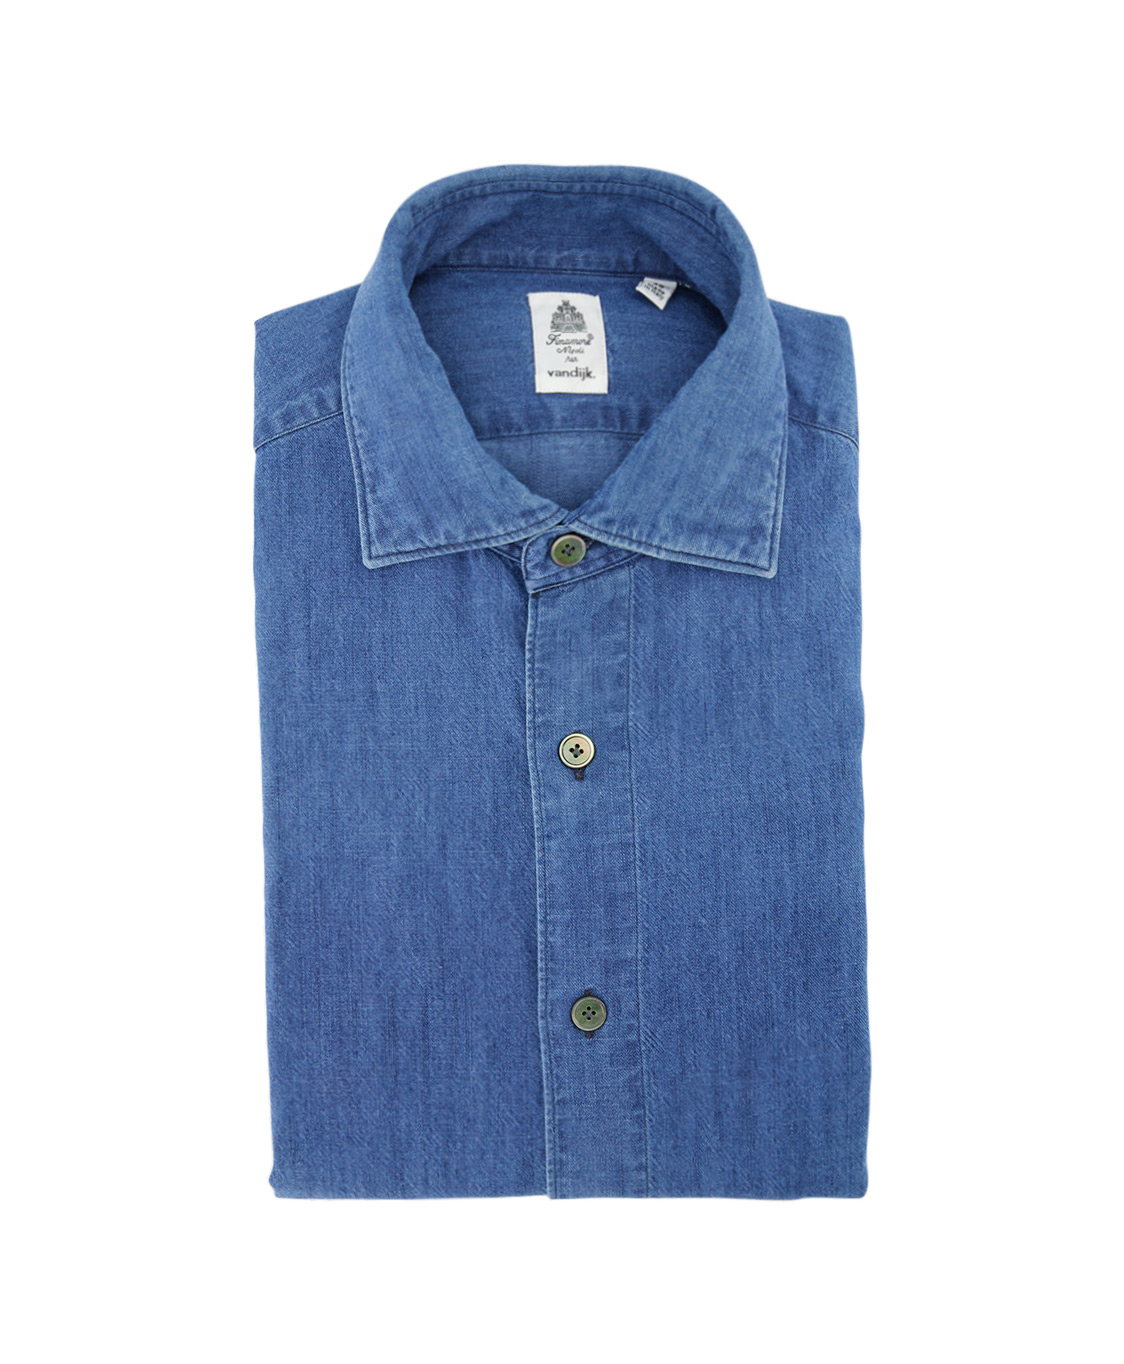 Finamore 1925 Overhemd 043985-c0156-01  Blauw